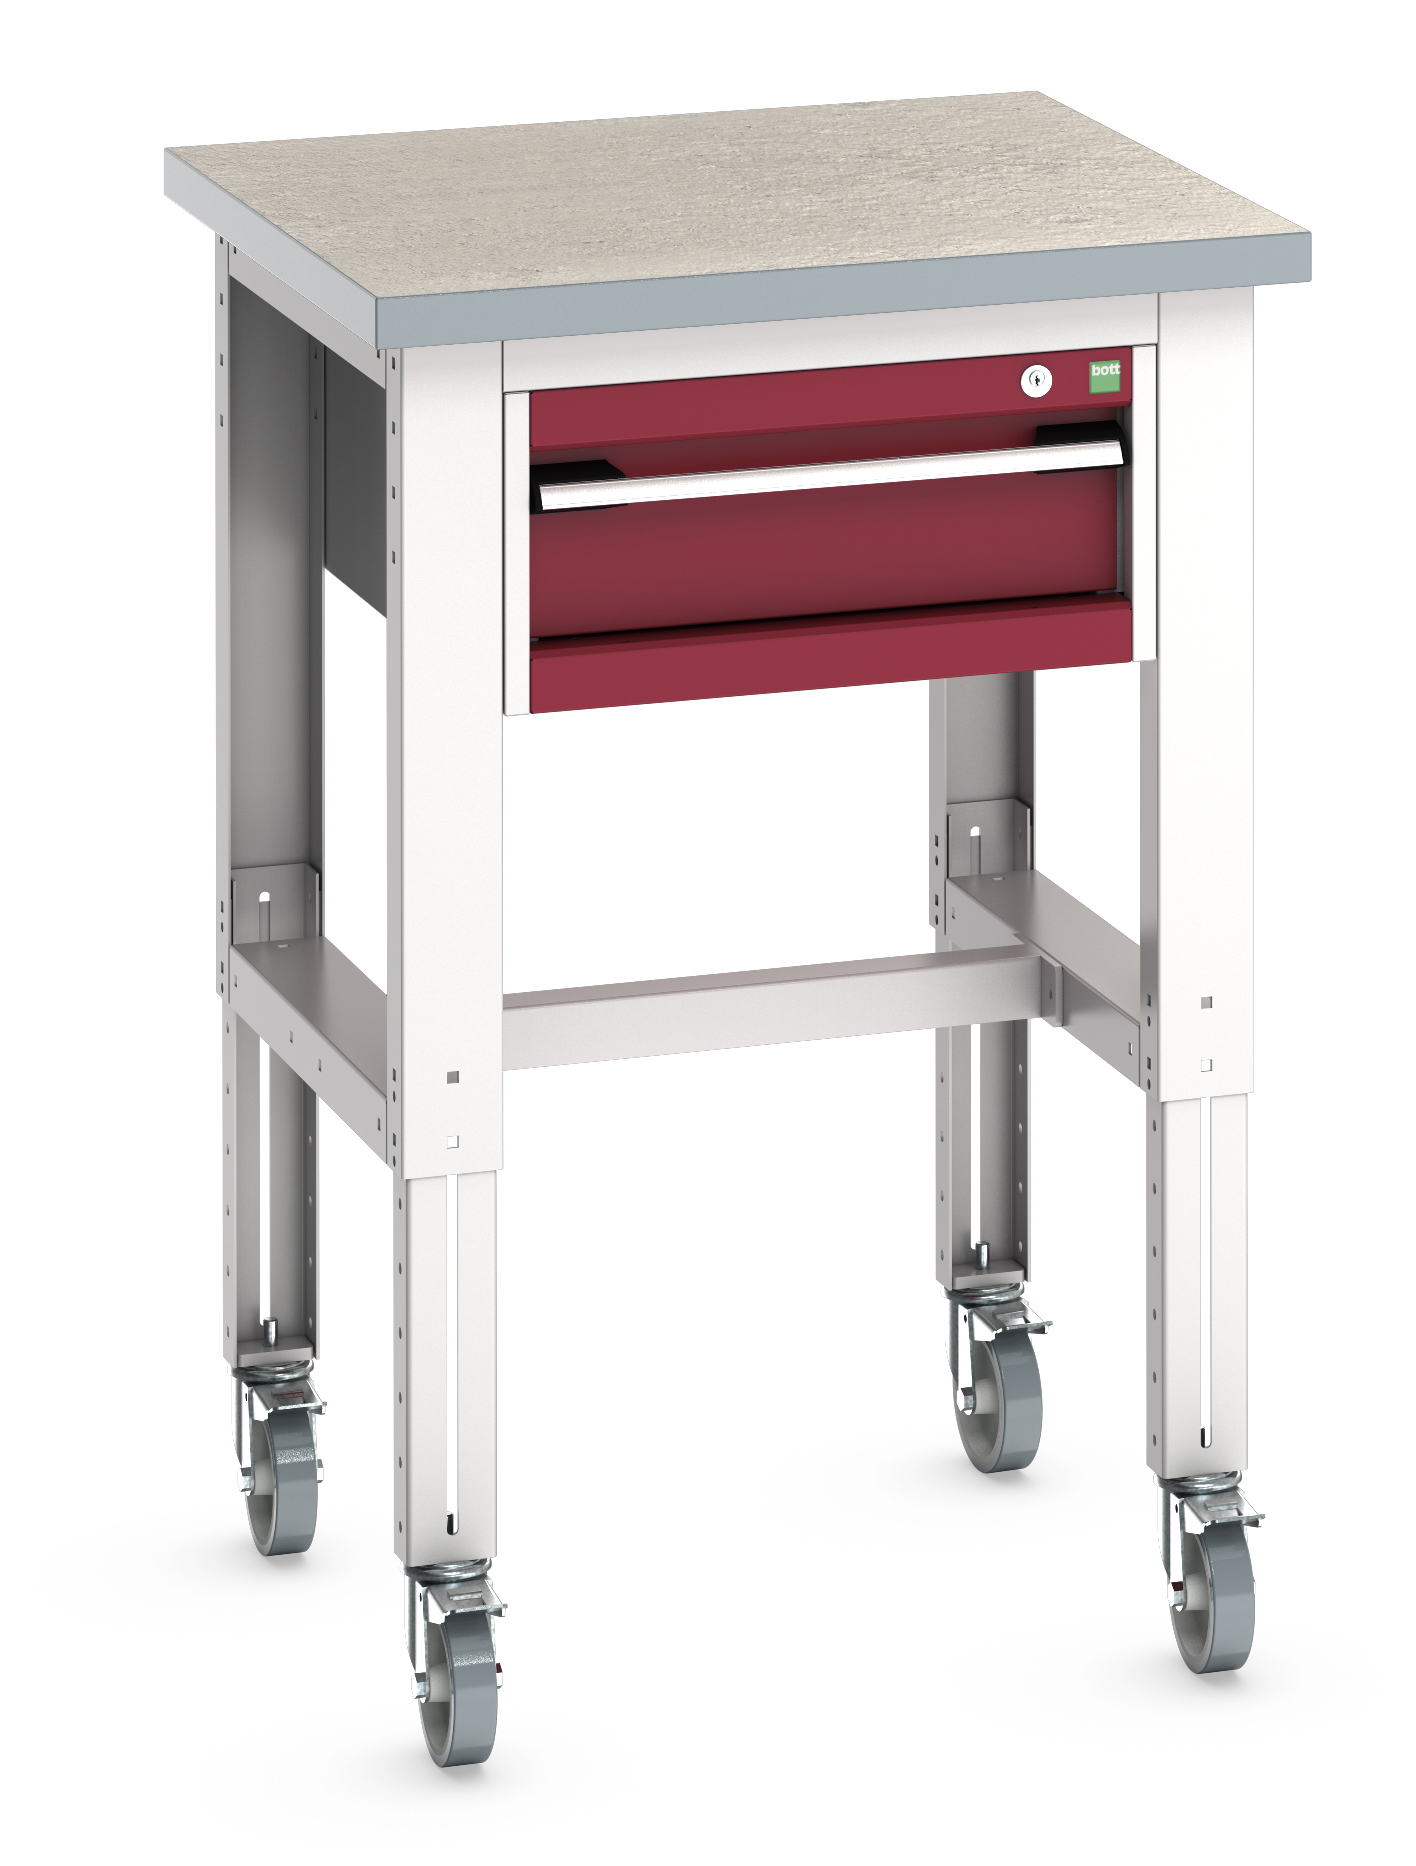 Bott Cubio Adjustable Height Mobile Workstand With 1 Drawer Cabinet - 41003273.24V